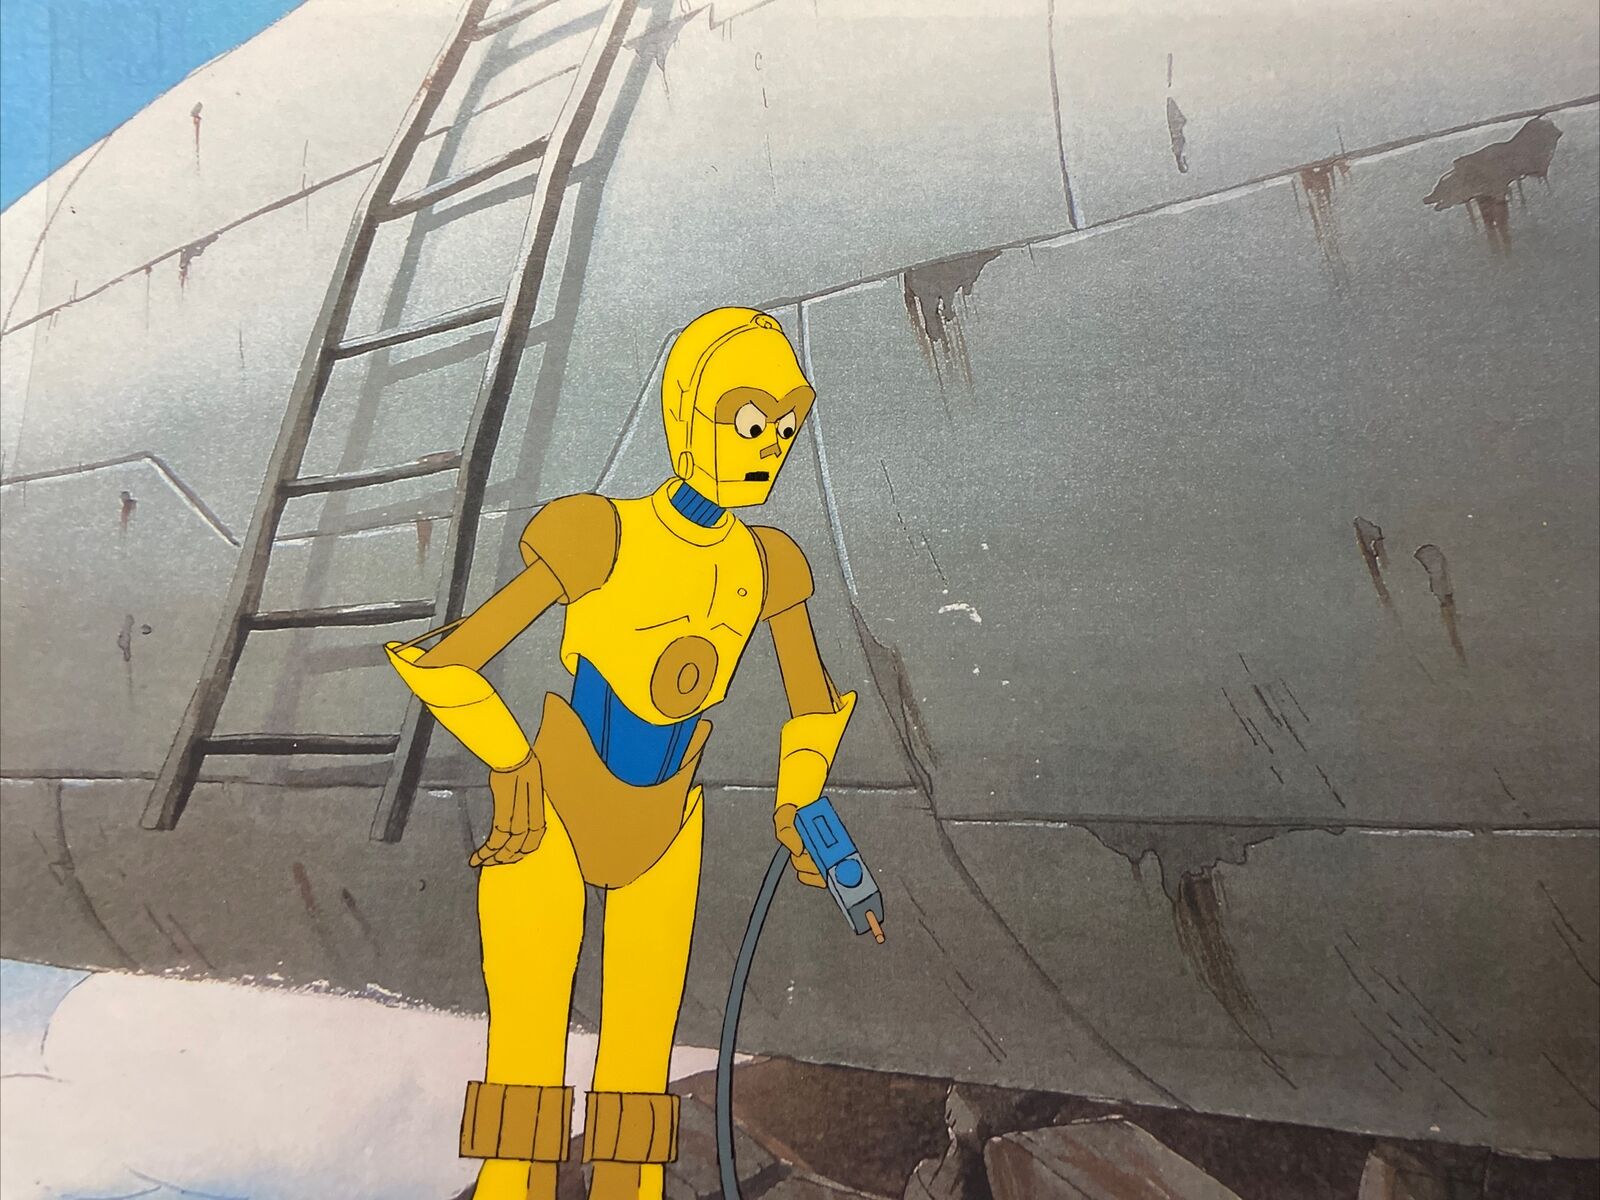 VINTAGE DROIDS animation cel BACKGROUND production art Star Wars C-3PO R2-D2 I16